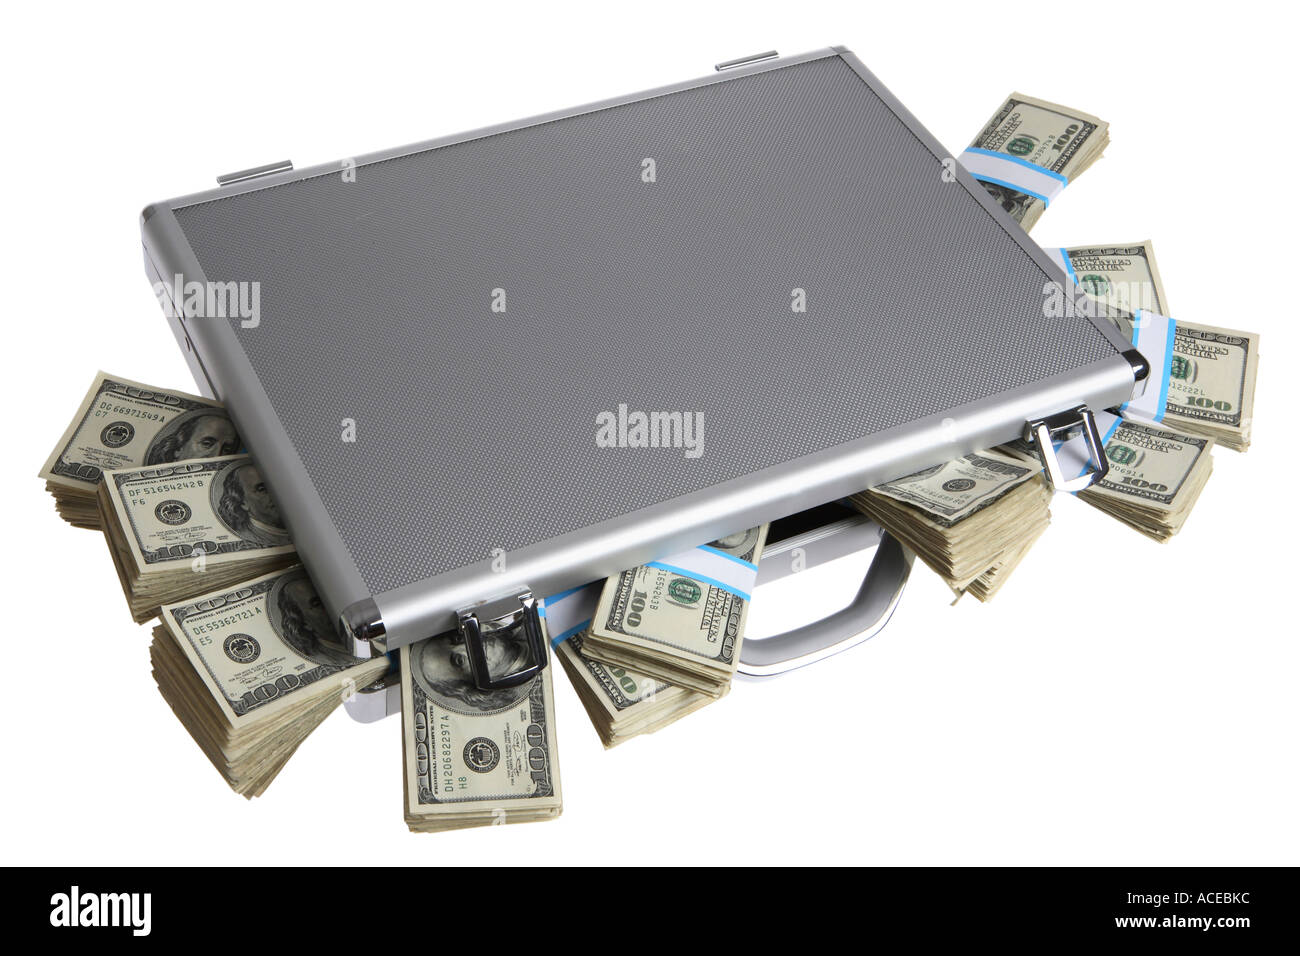 briefcase-stuffed-full-of-money-ACEBKC.jpg